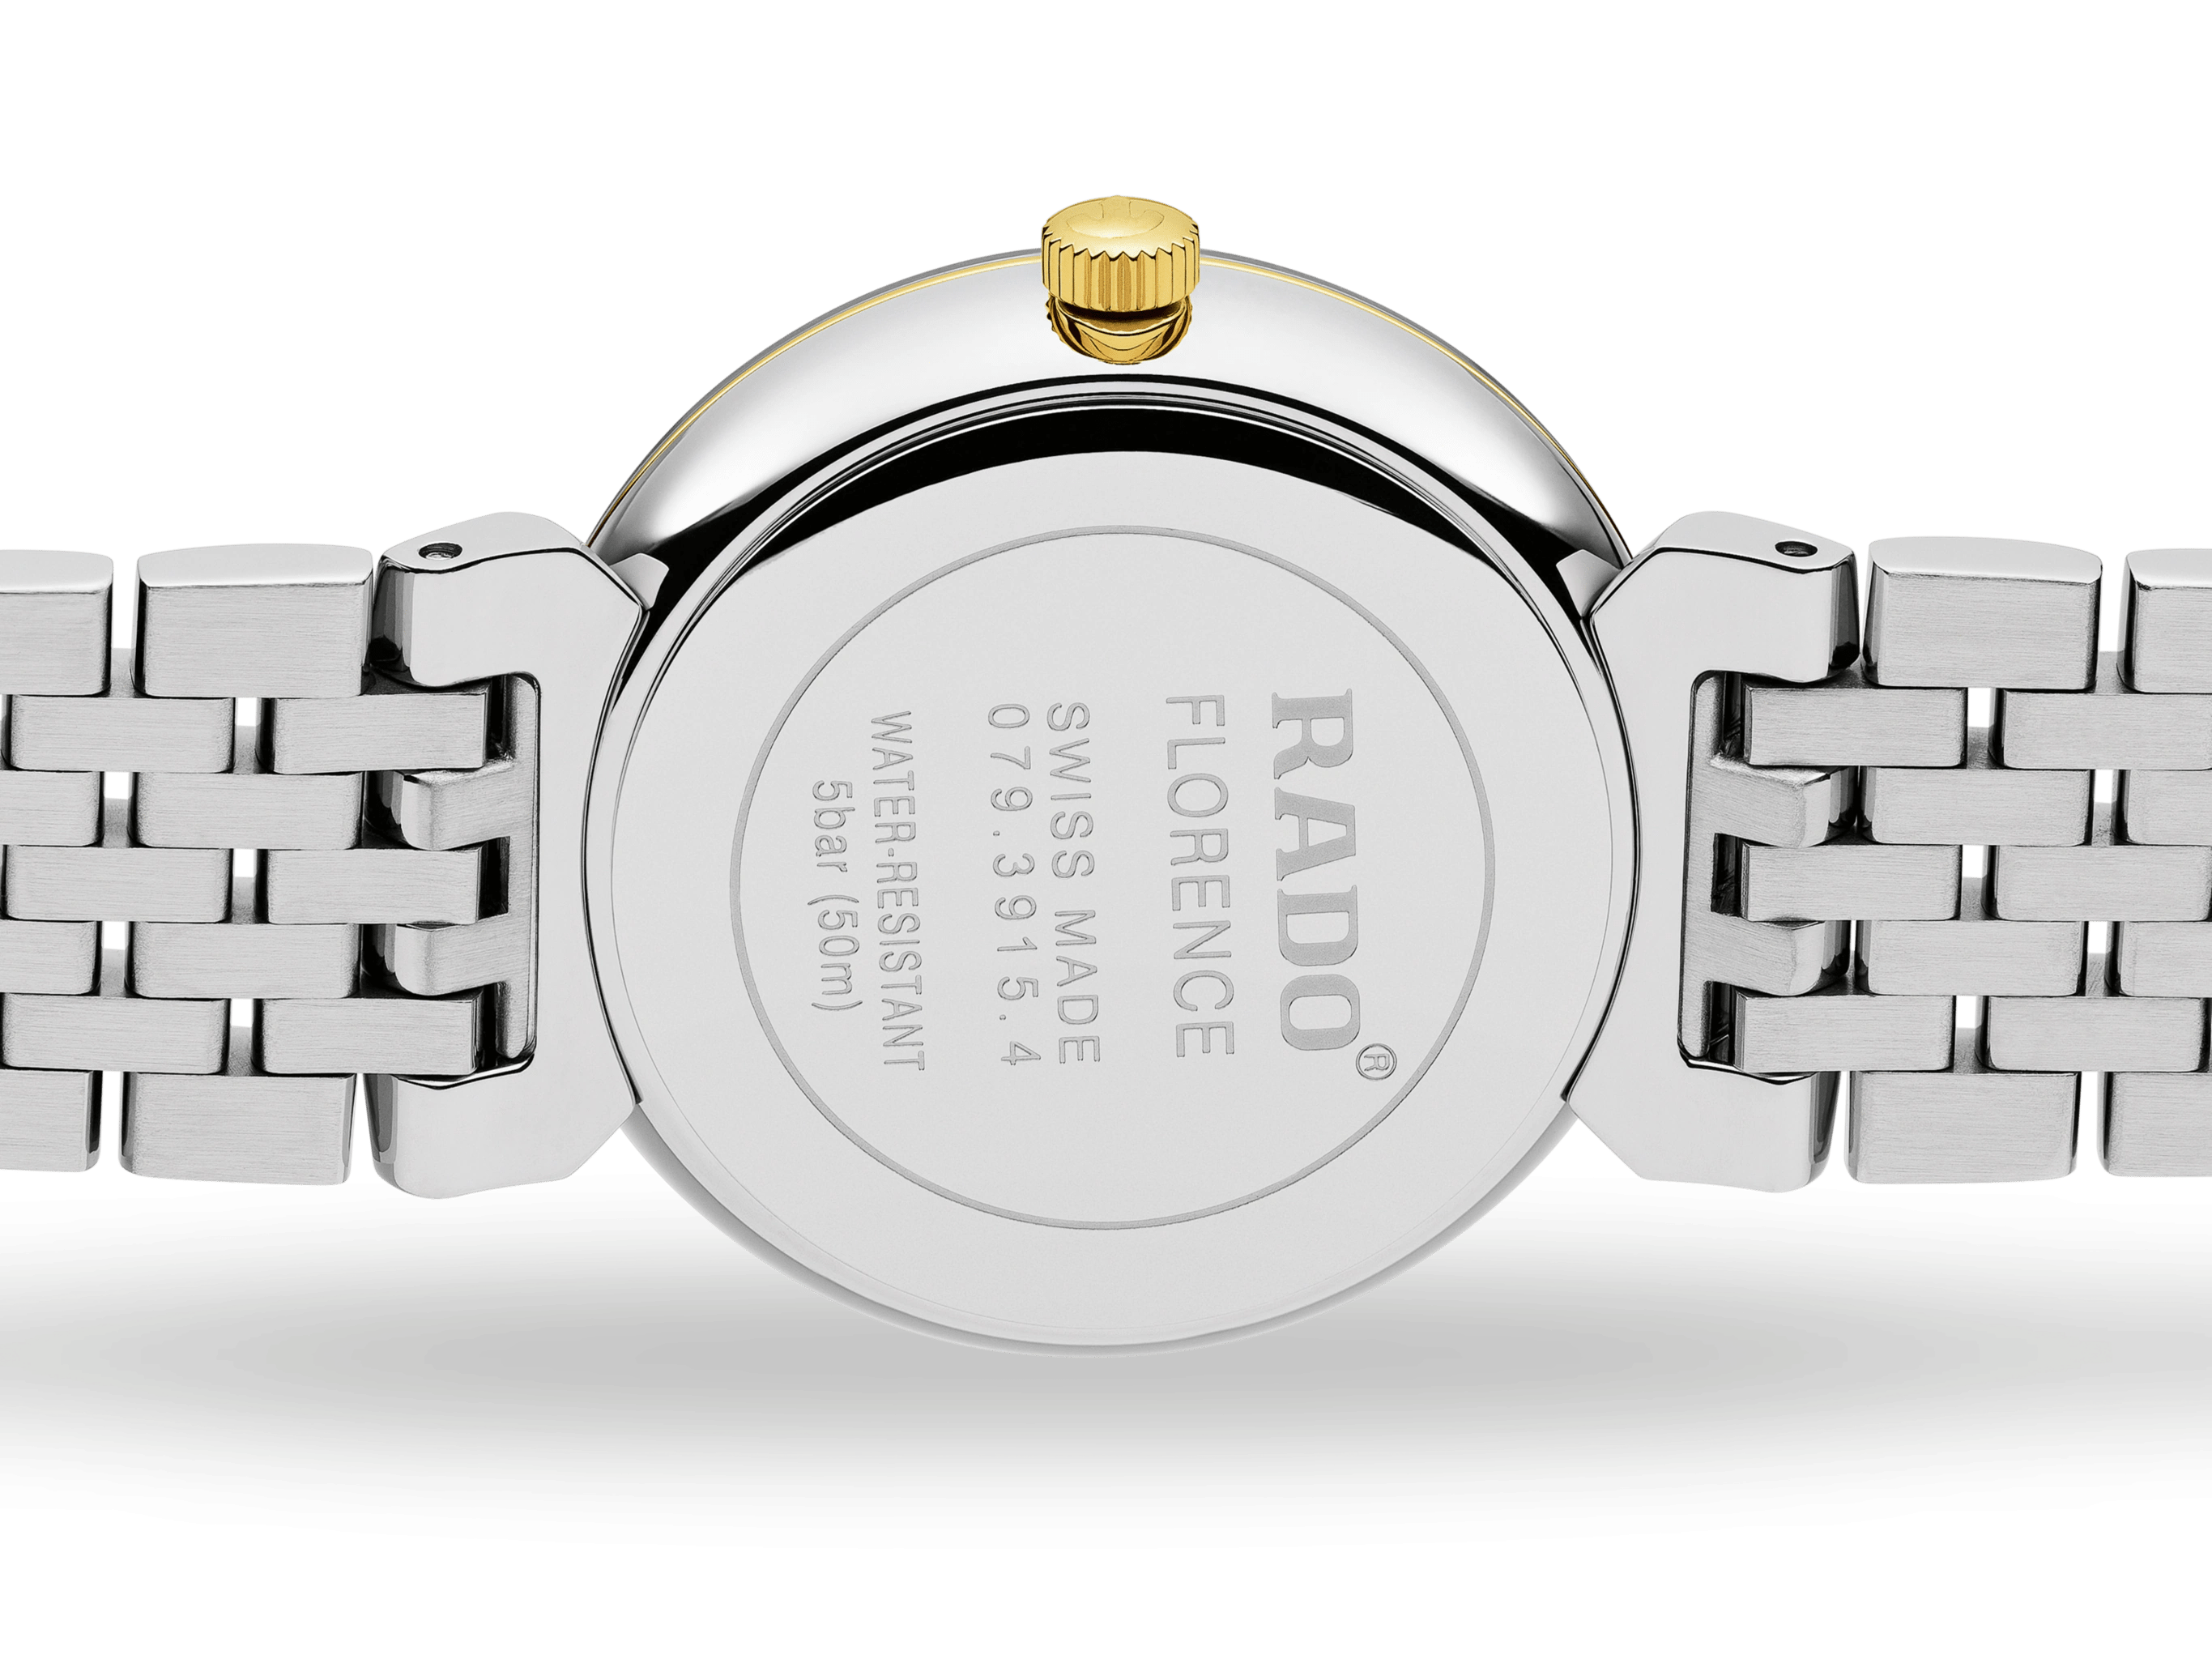 RADO Florence Classic 30mm Gold-Silver Women's Watch R48913023